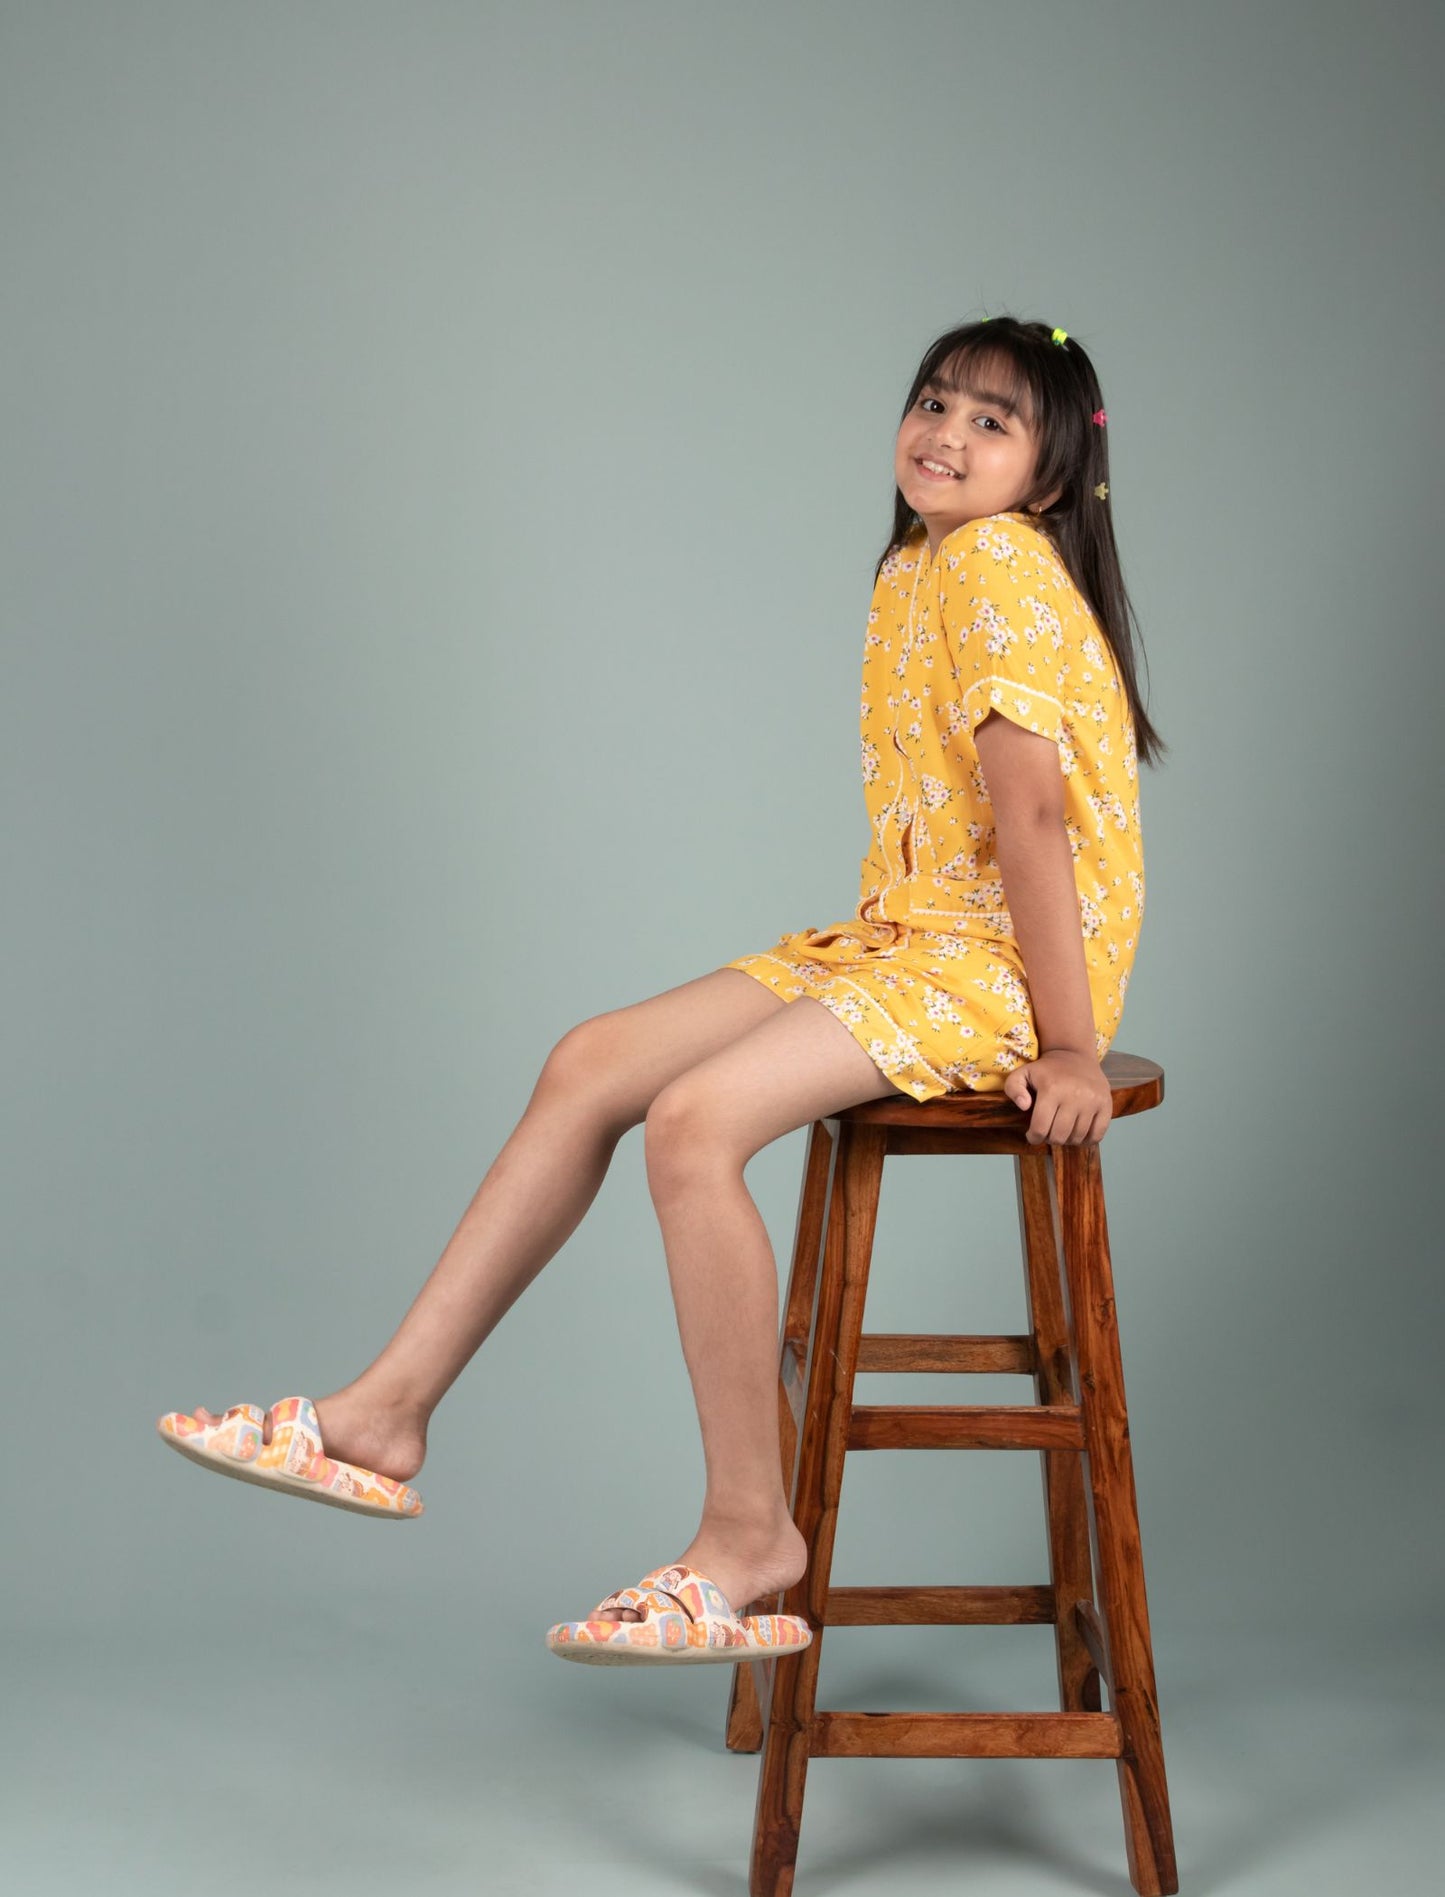 Girls Kids Pure Rayon Floral Print Summer Nightsuit (Half Sleeve, Yellow)